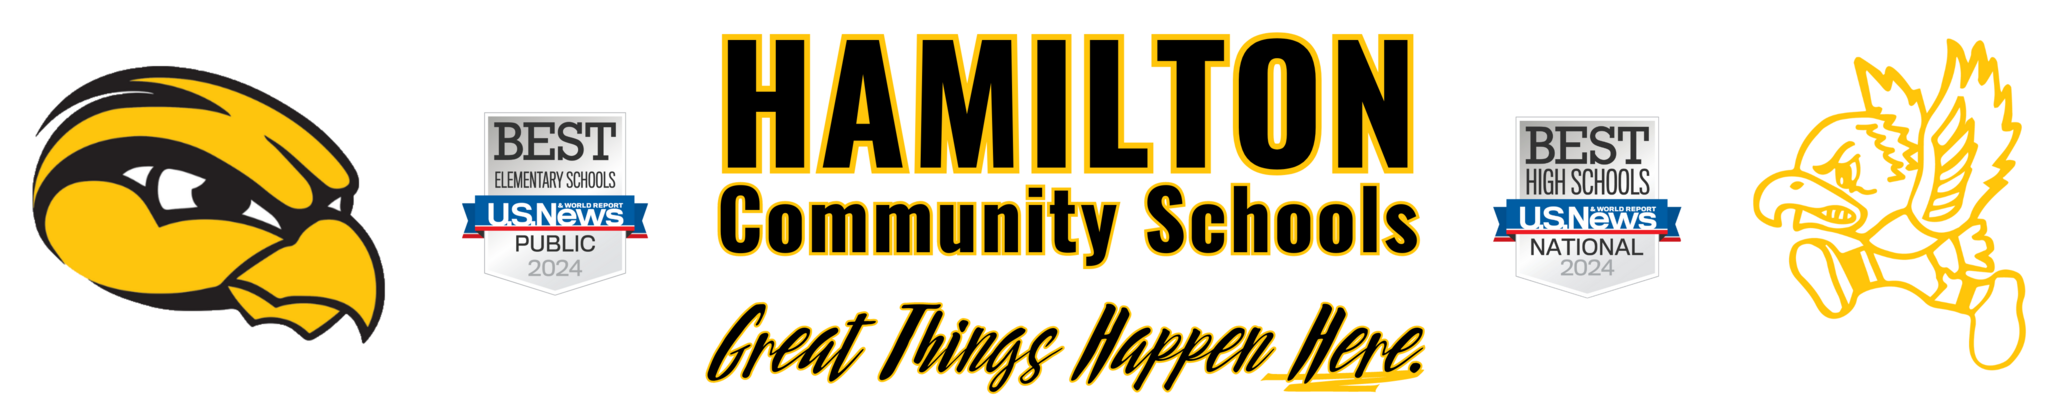 Hamilton Community Schools website banner 2024